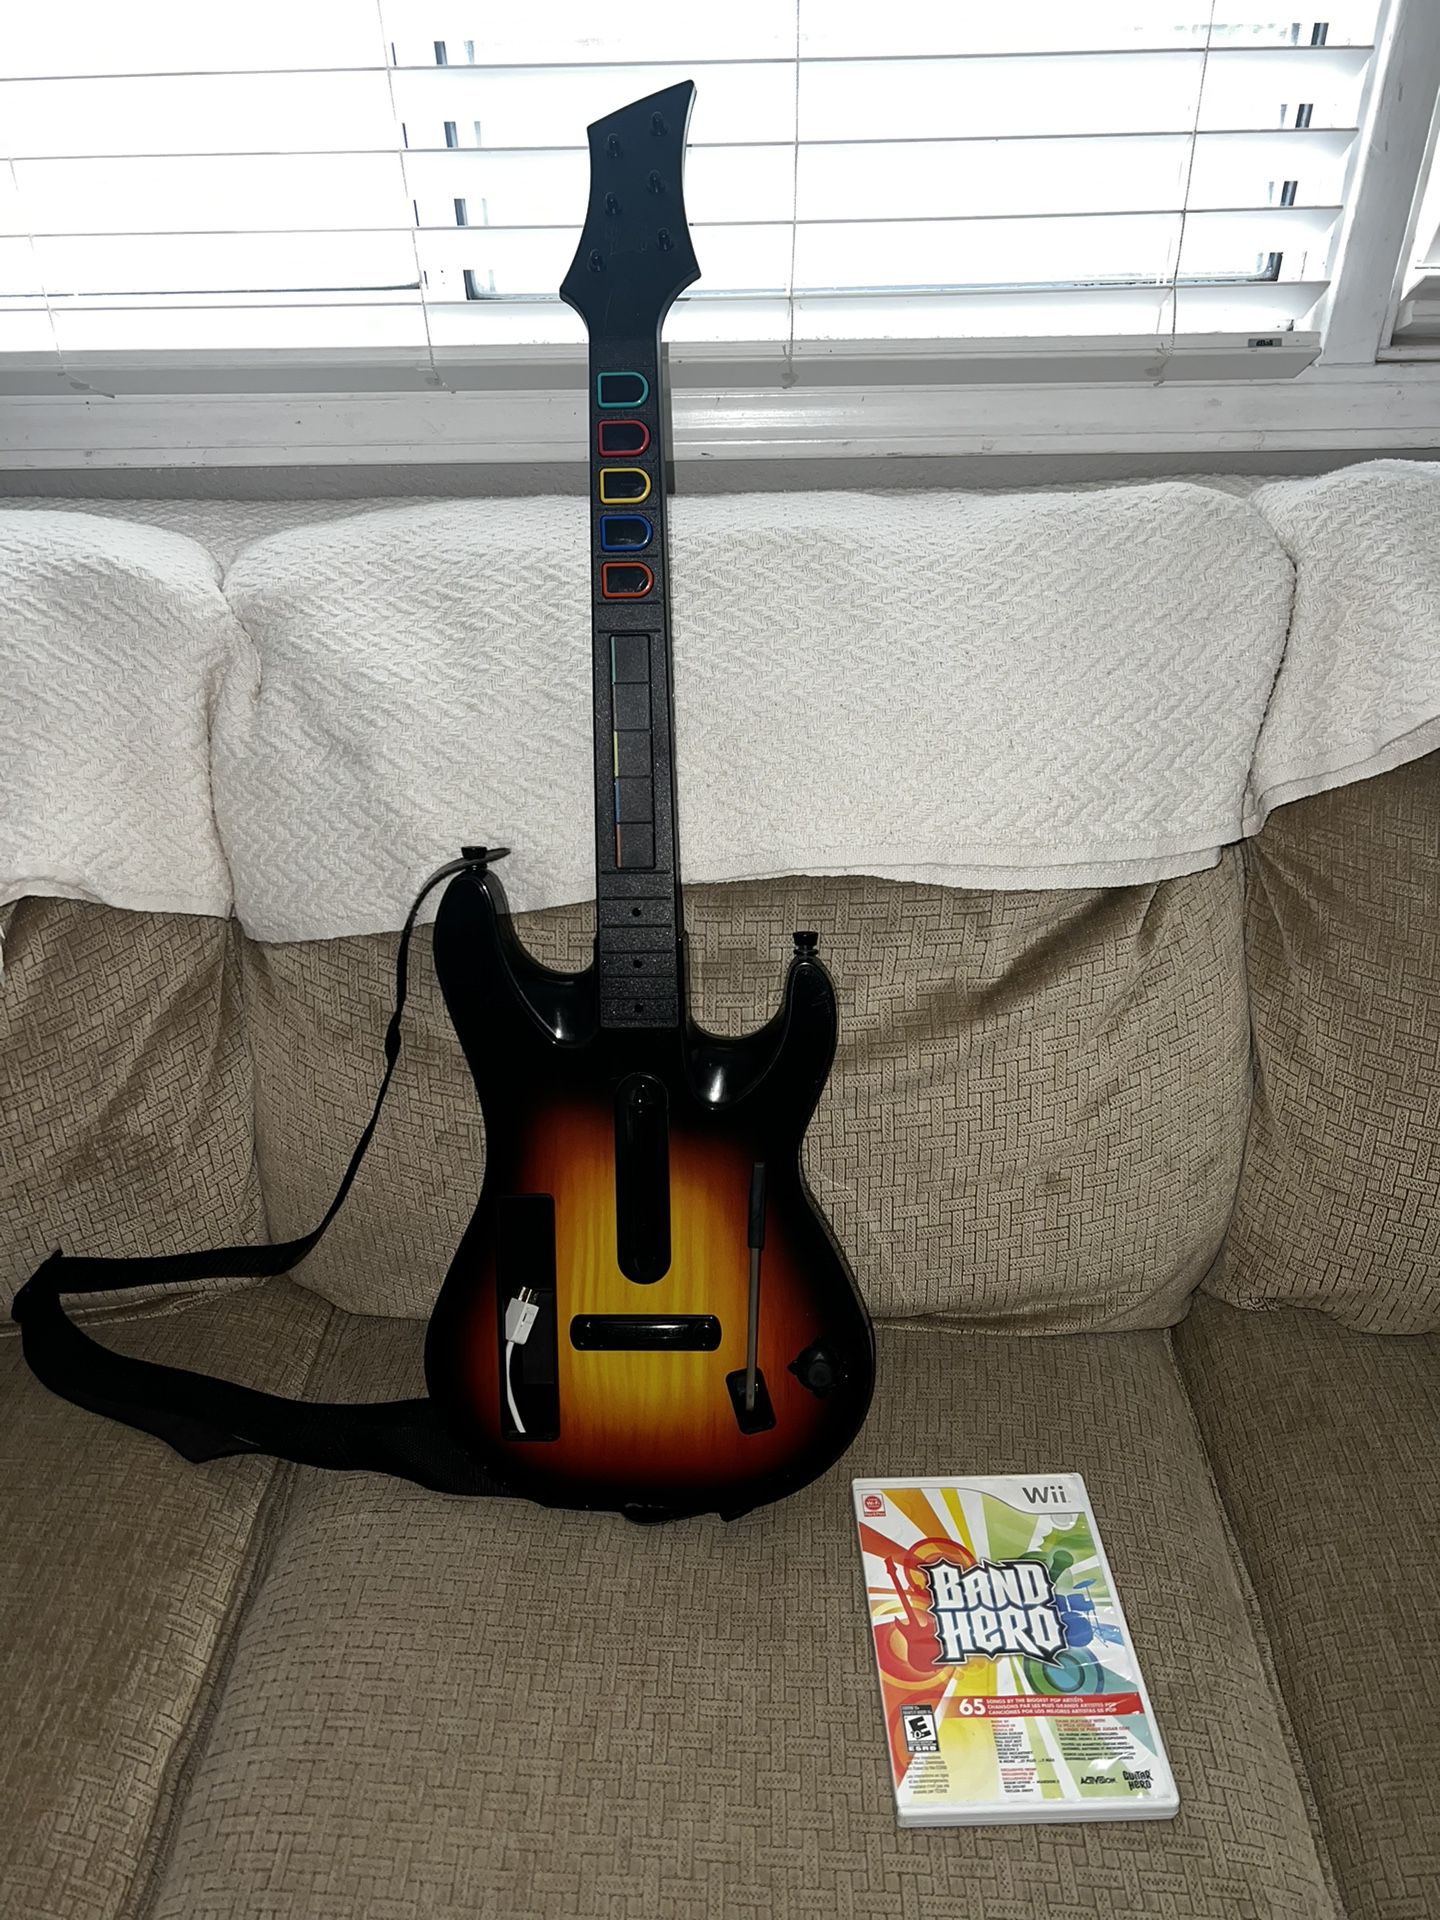 Guitar hero Bundle For Wii